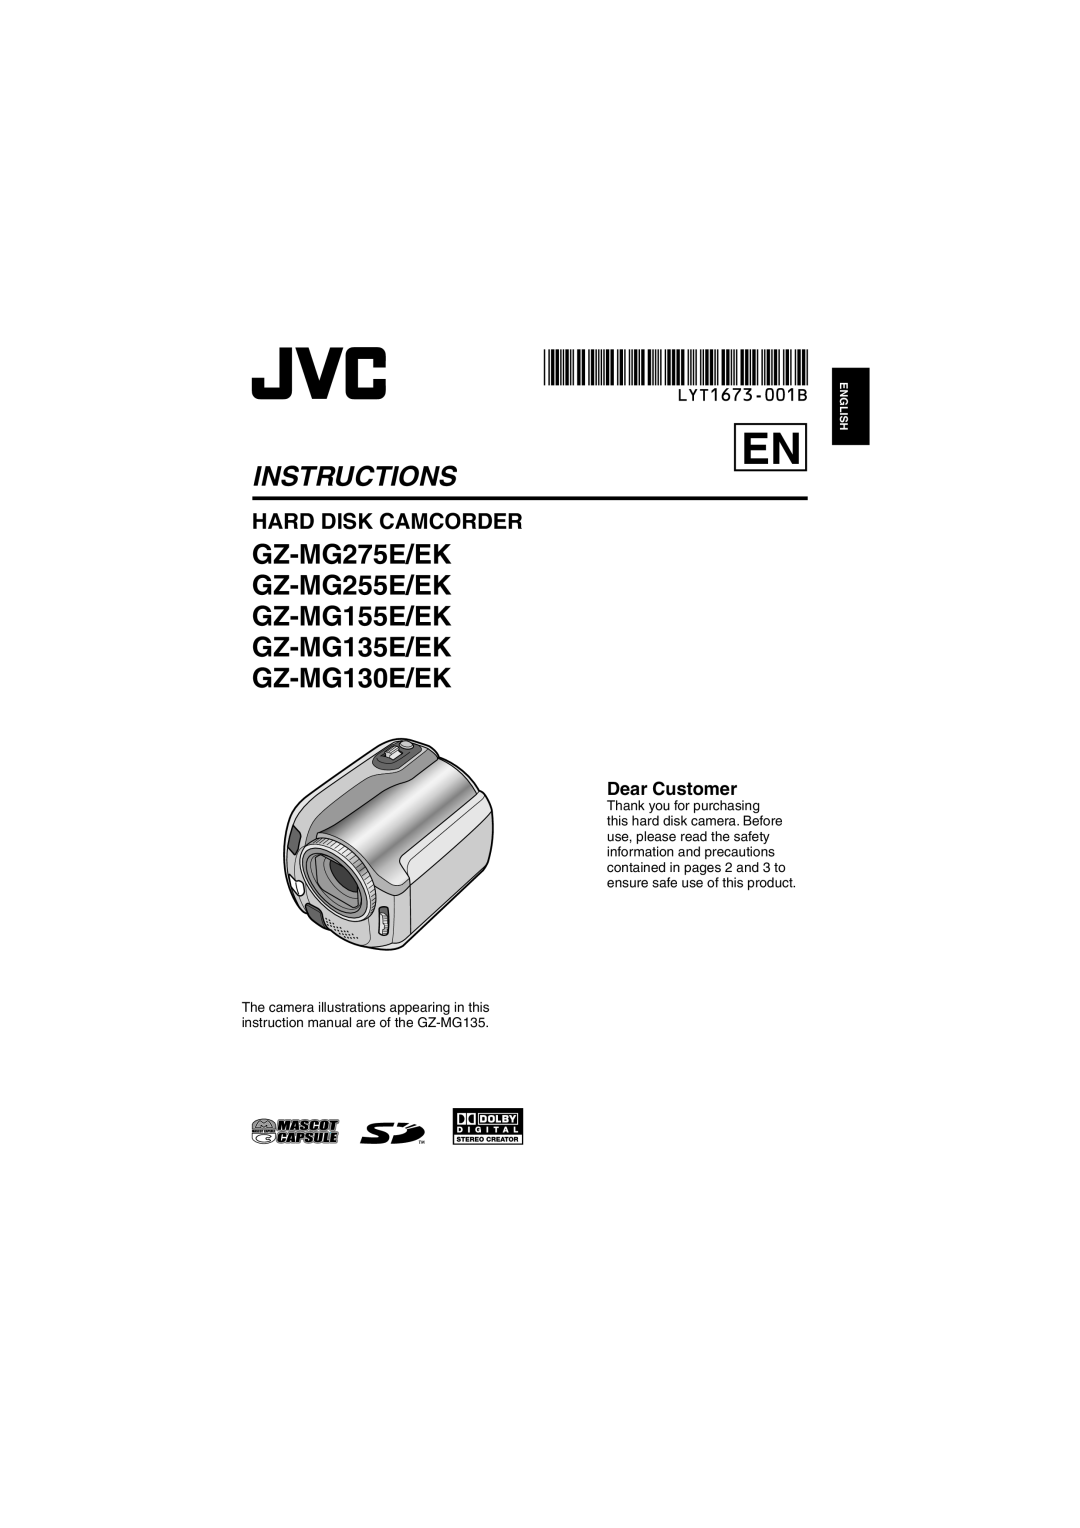 JVC instruction manual Instructions, GZ-MG275E/EK GZ-MG255E/EK GZ-MG155E/EK GZ-MG135E/EK GZ-MG130E/EK, English 